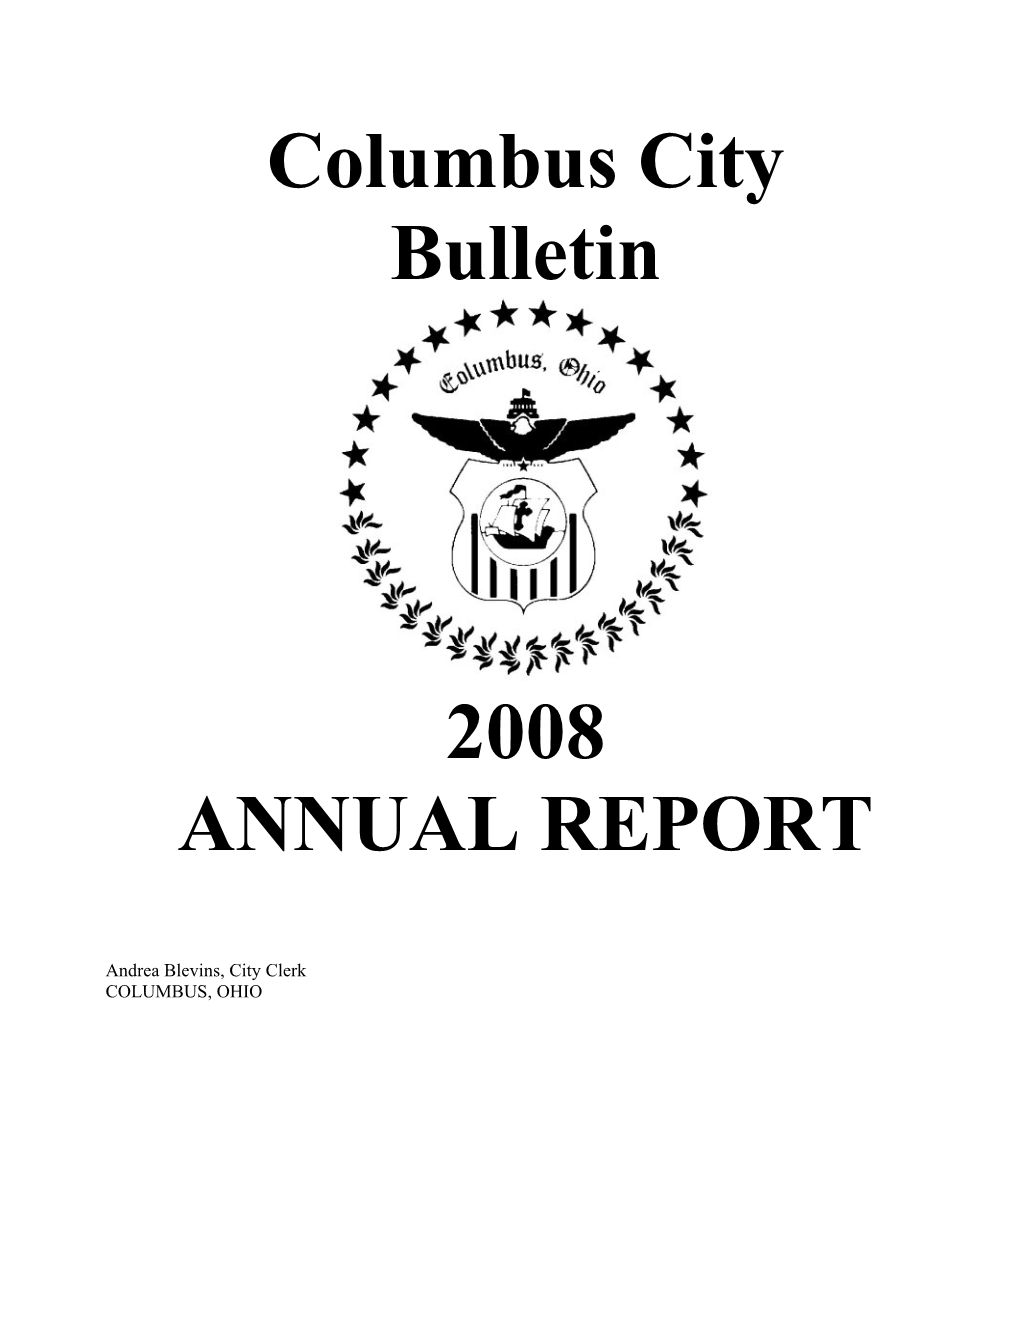 Columbus City Bulletin 2008 ANNUAL REPORT